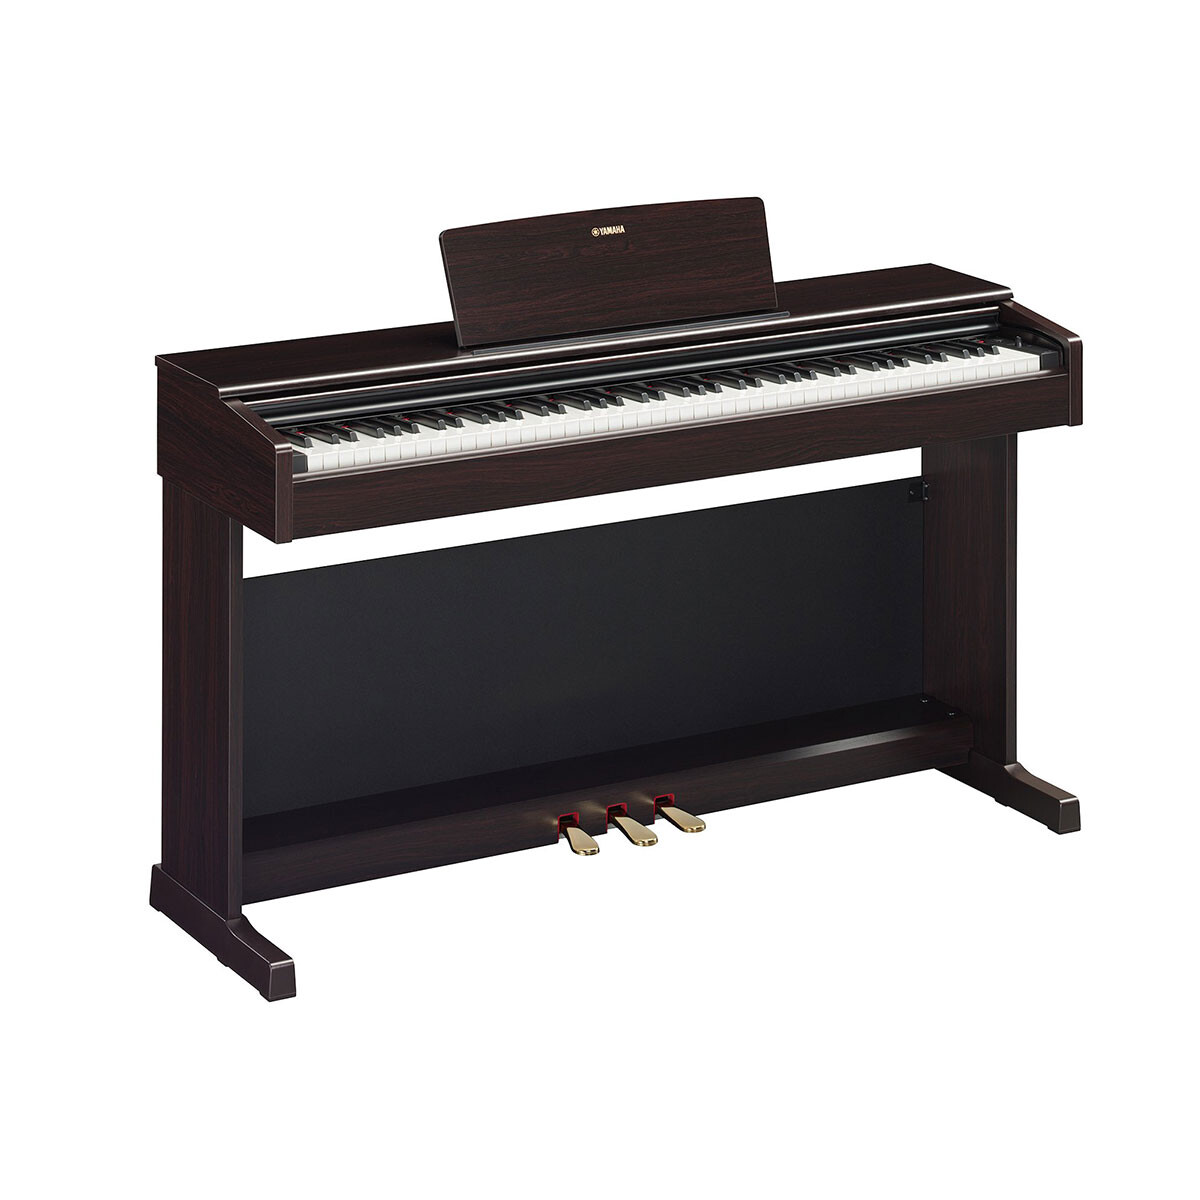 Piano Digital Yamaha Ydp145r Rosewood C/banqueta 